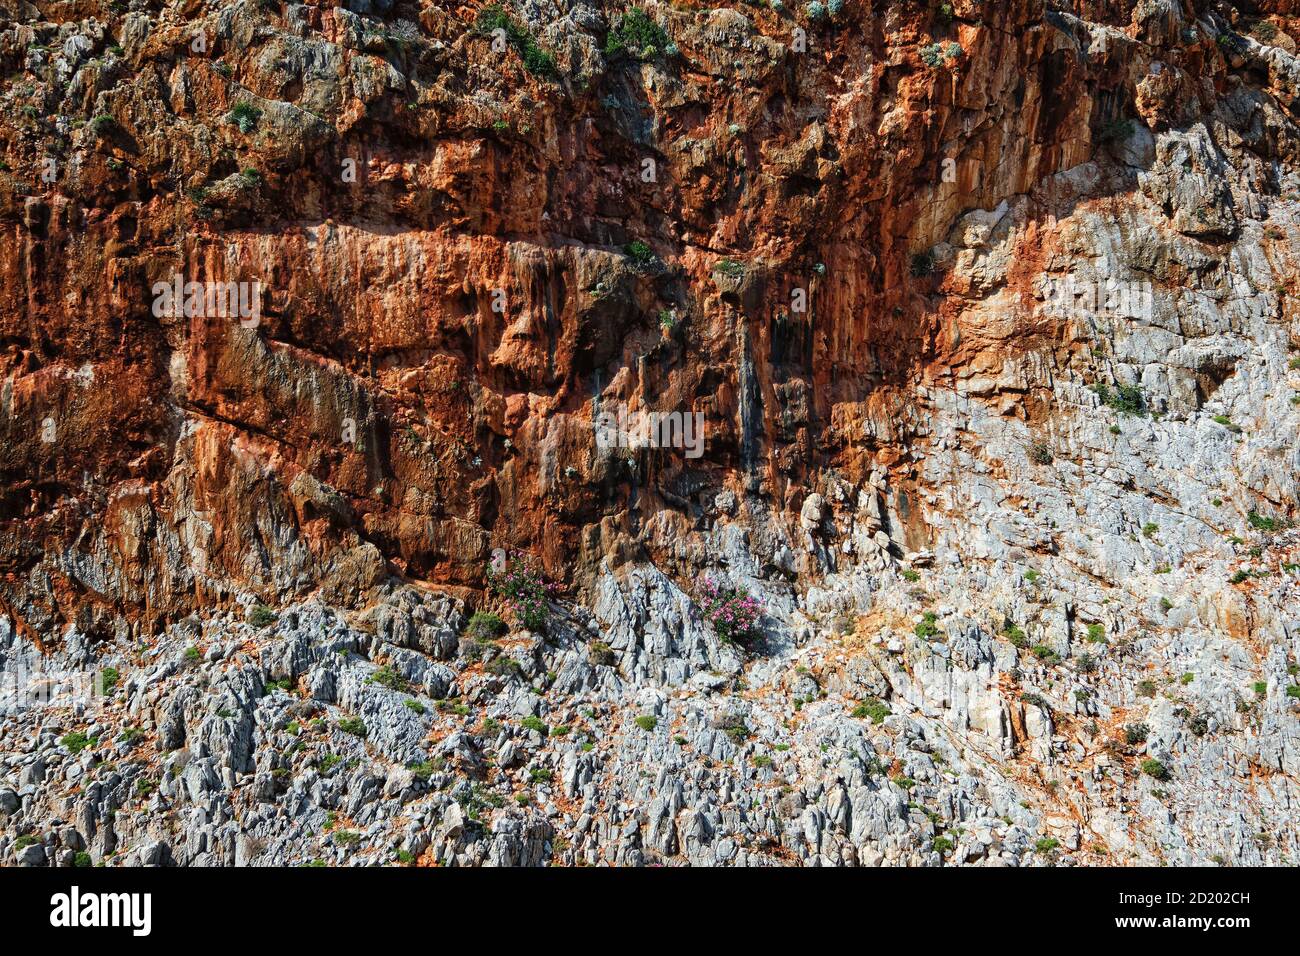 Textures of rocky sandstone cliffs at daytime, white and red rocks. Seitan Limania, Akrotiri peninsula, Chania region, Crete island, Greece Stock Photo